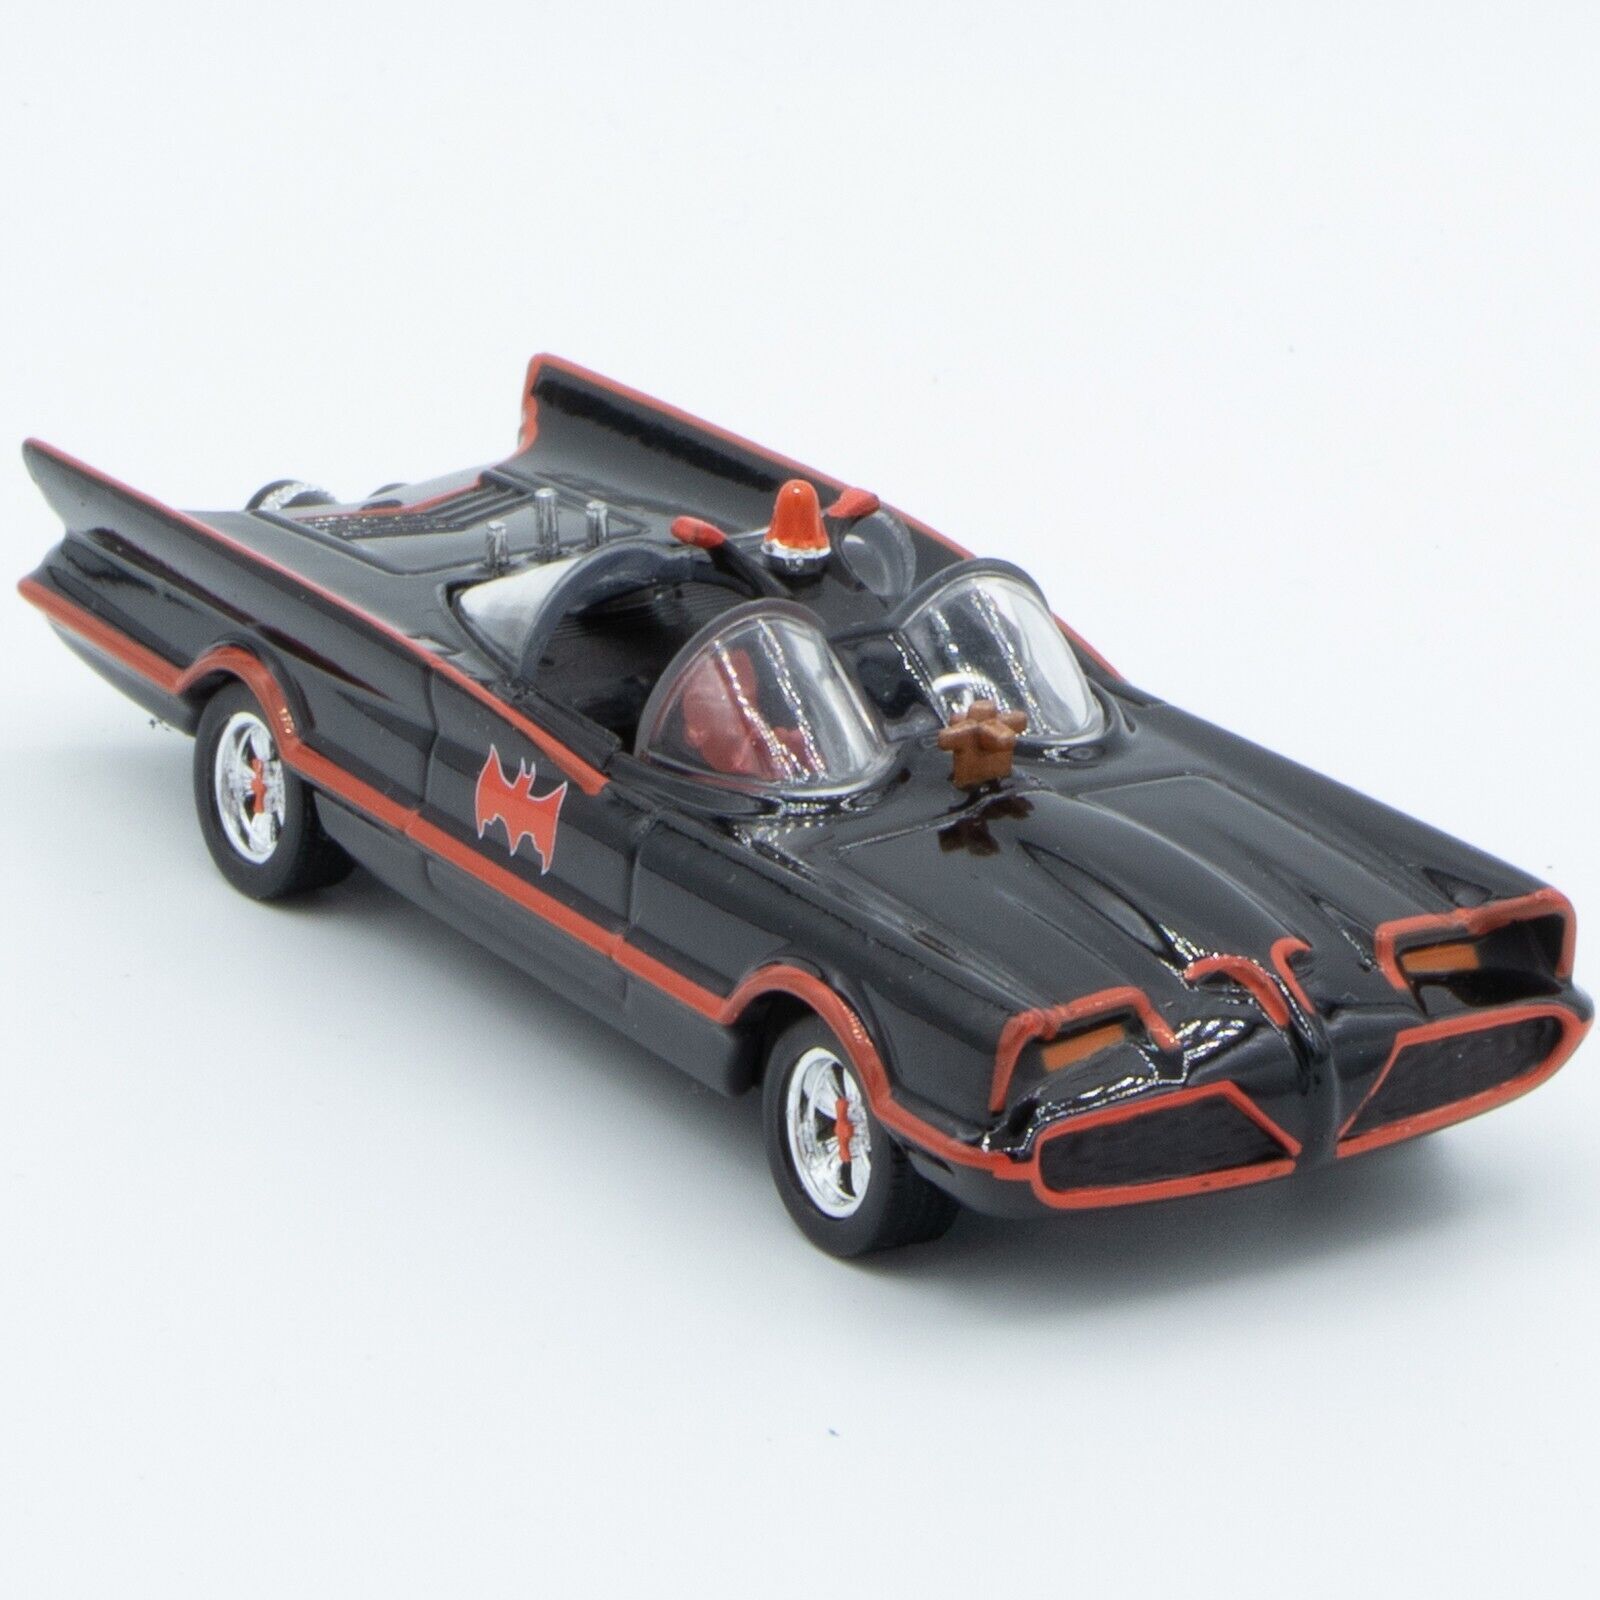 Hot Wheels Premium DC Batman - Classic 1966 TV Series Batmobile 1:50 Scale